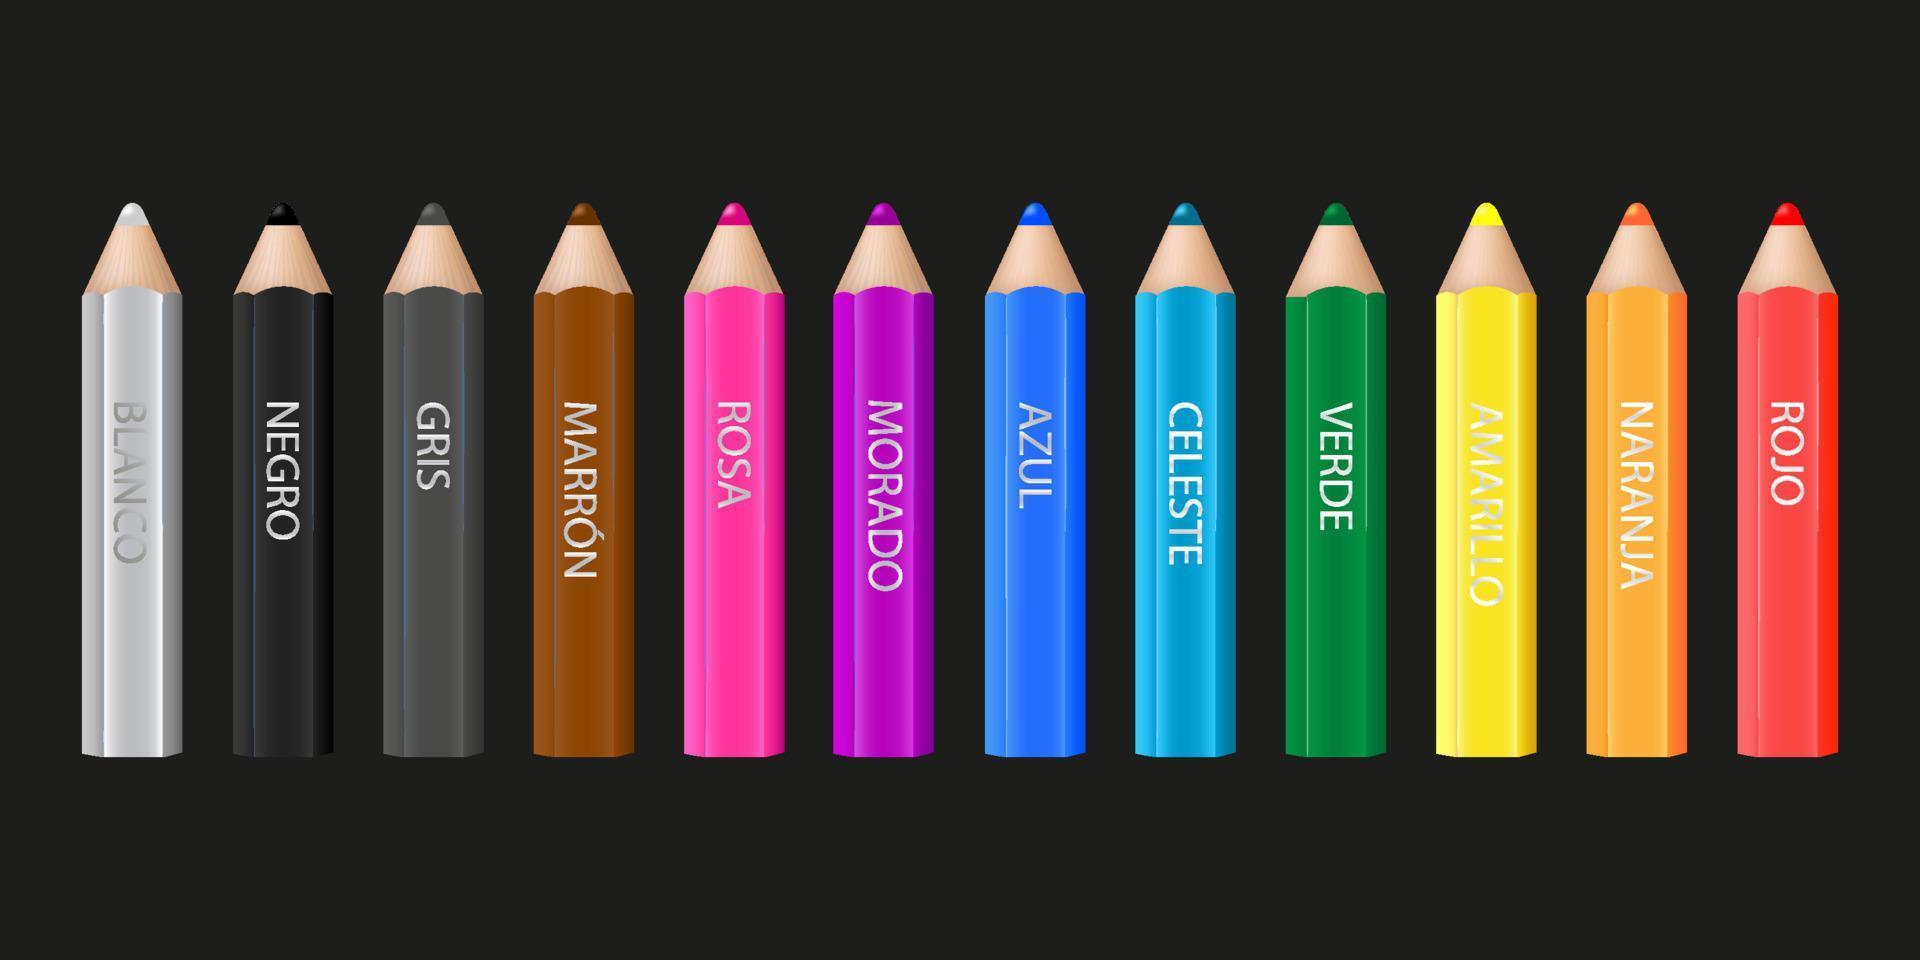 12 crayons en bois colorés. noms de couleurs - rojo, naranja, amarillo, verde, celeste, azul, morado, rosa, marron, gris, negro, blanco. conception de vecteur. vecteur